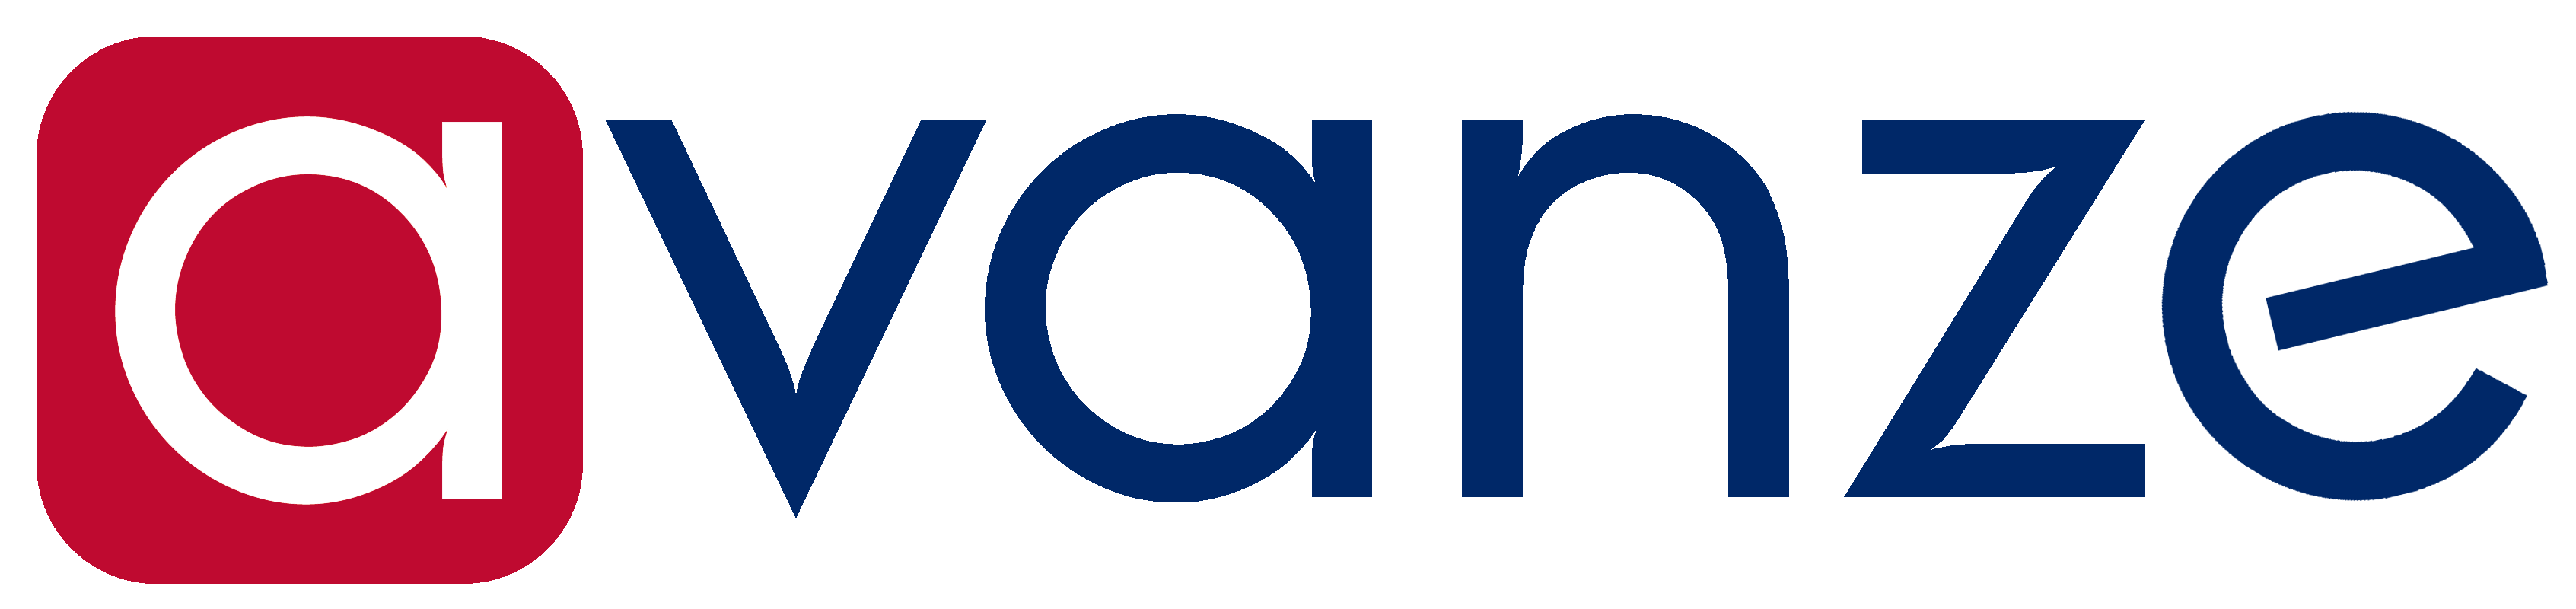 Avanze logo